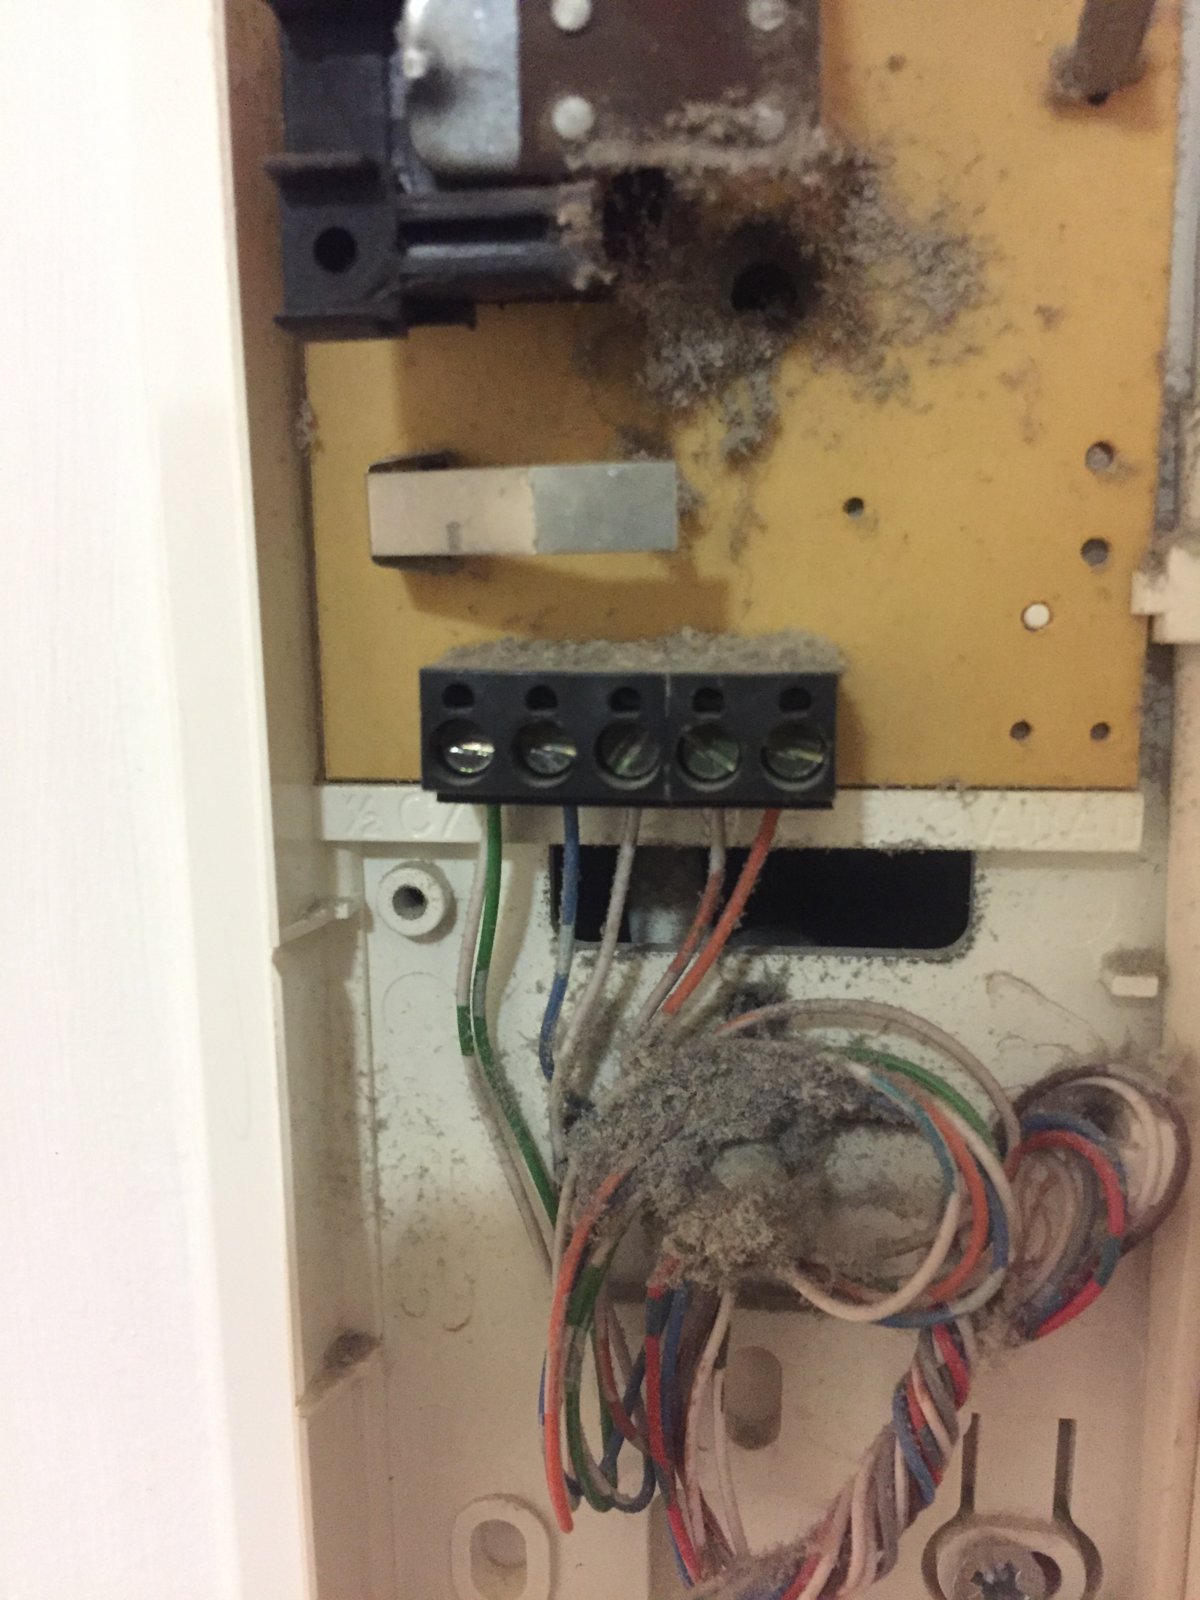 Intercom door entry system wiring | DIYnot Forums